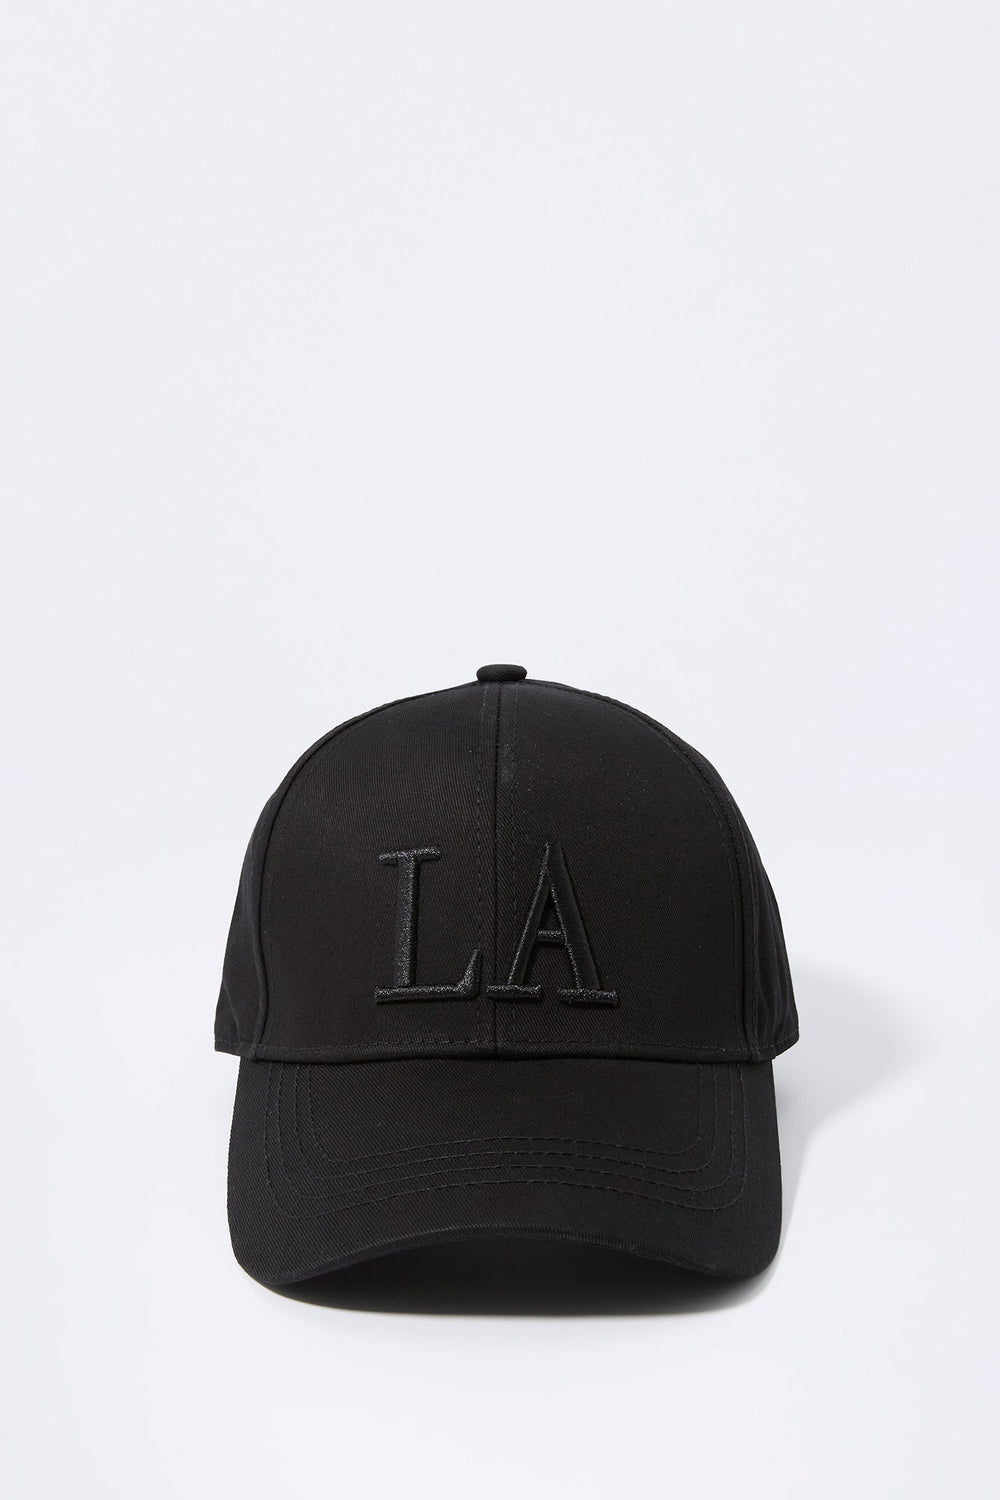 Black LA Embroidered Baseball Hat Black LA Embroidered Baseball Hat 1